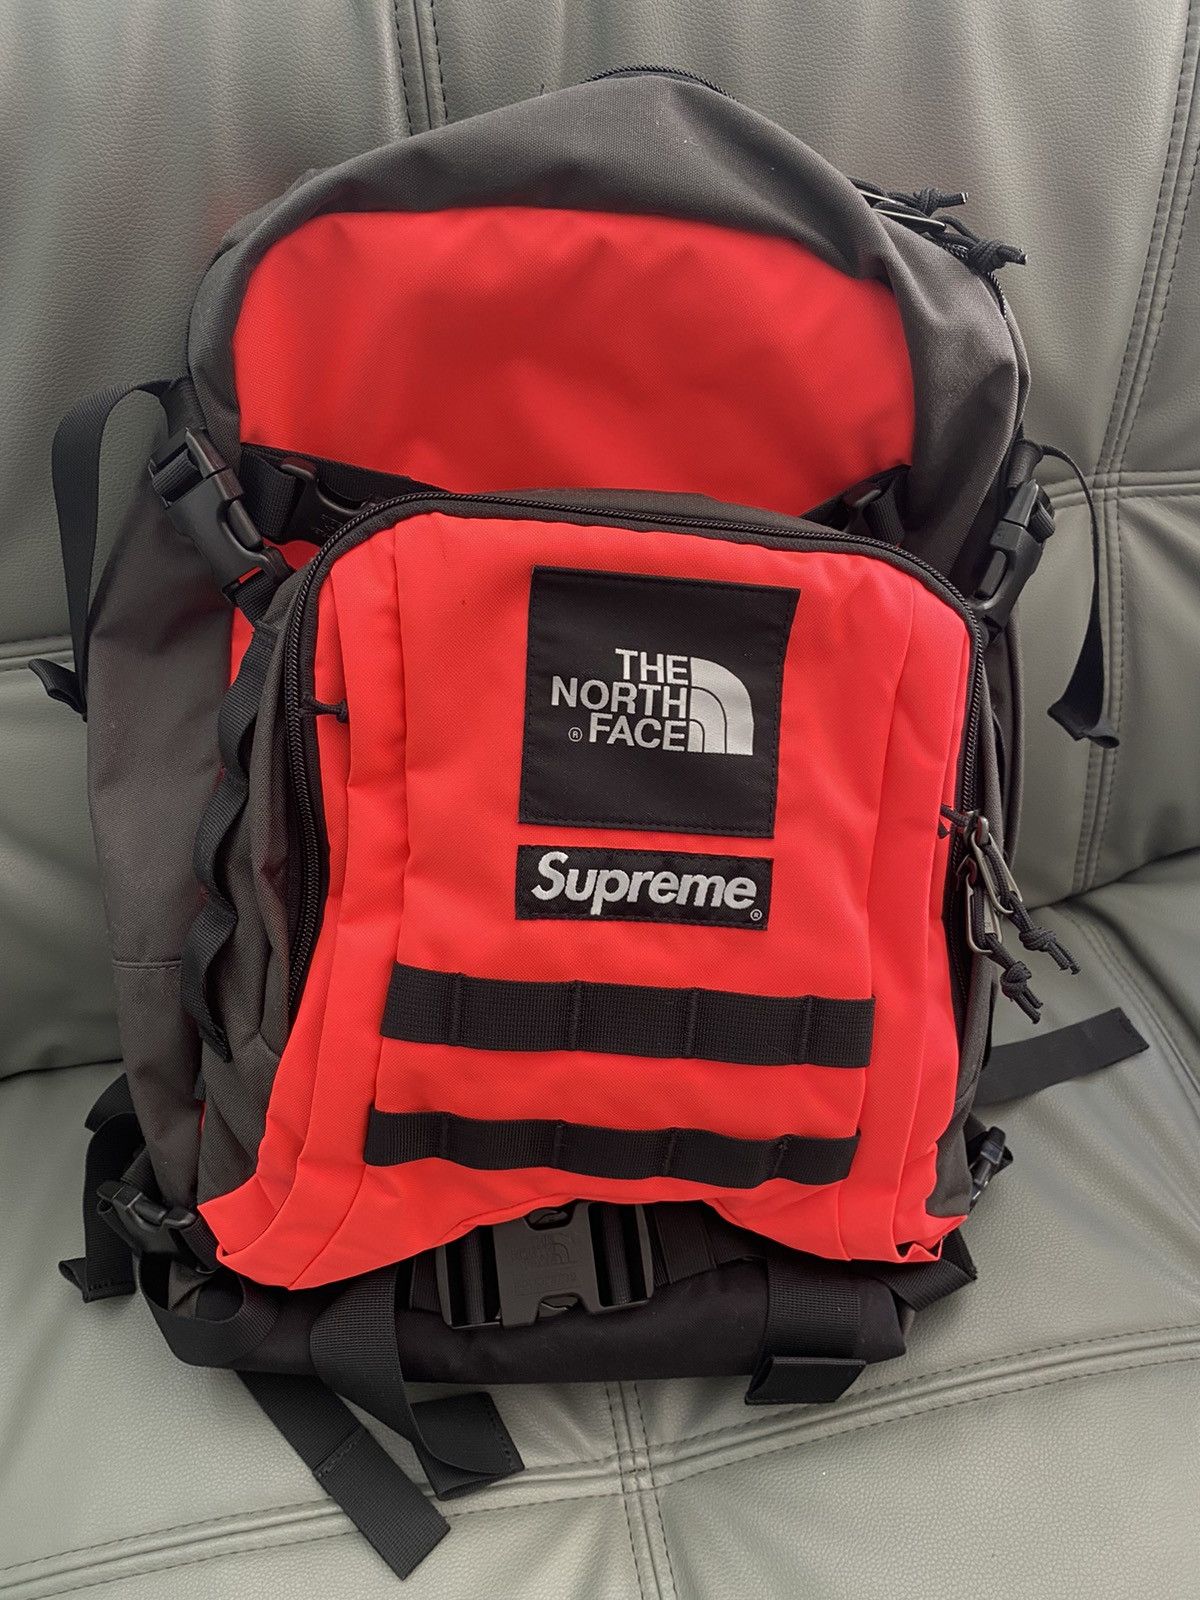 Supreme Supreme x TNF RTG backpack red | Grailed